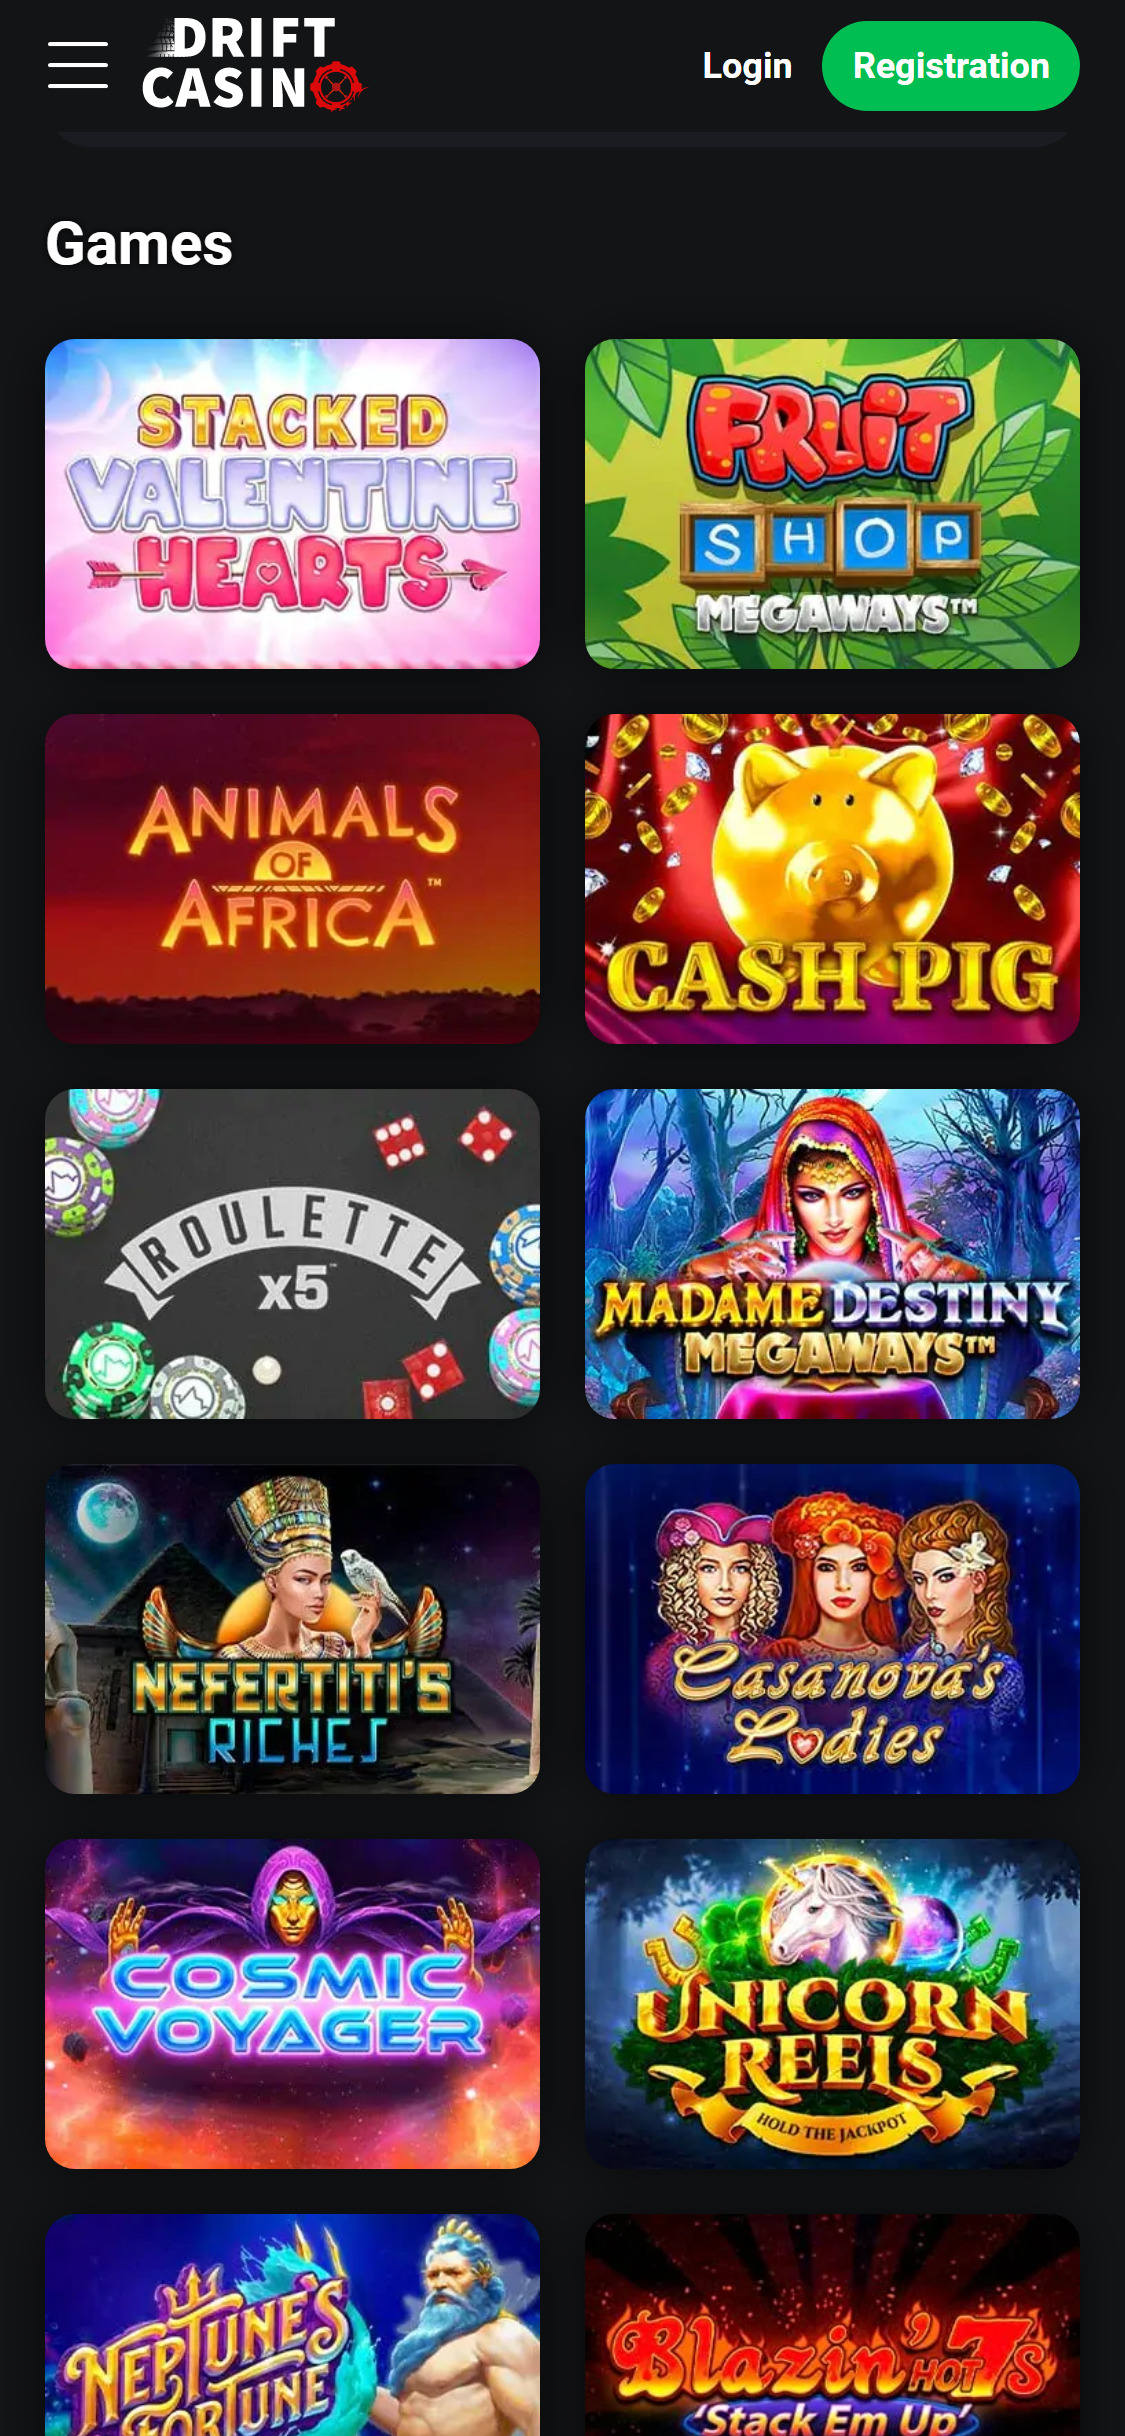 Casino Drift Mobile Games Review